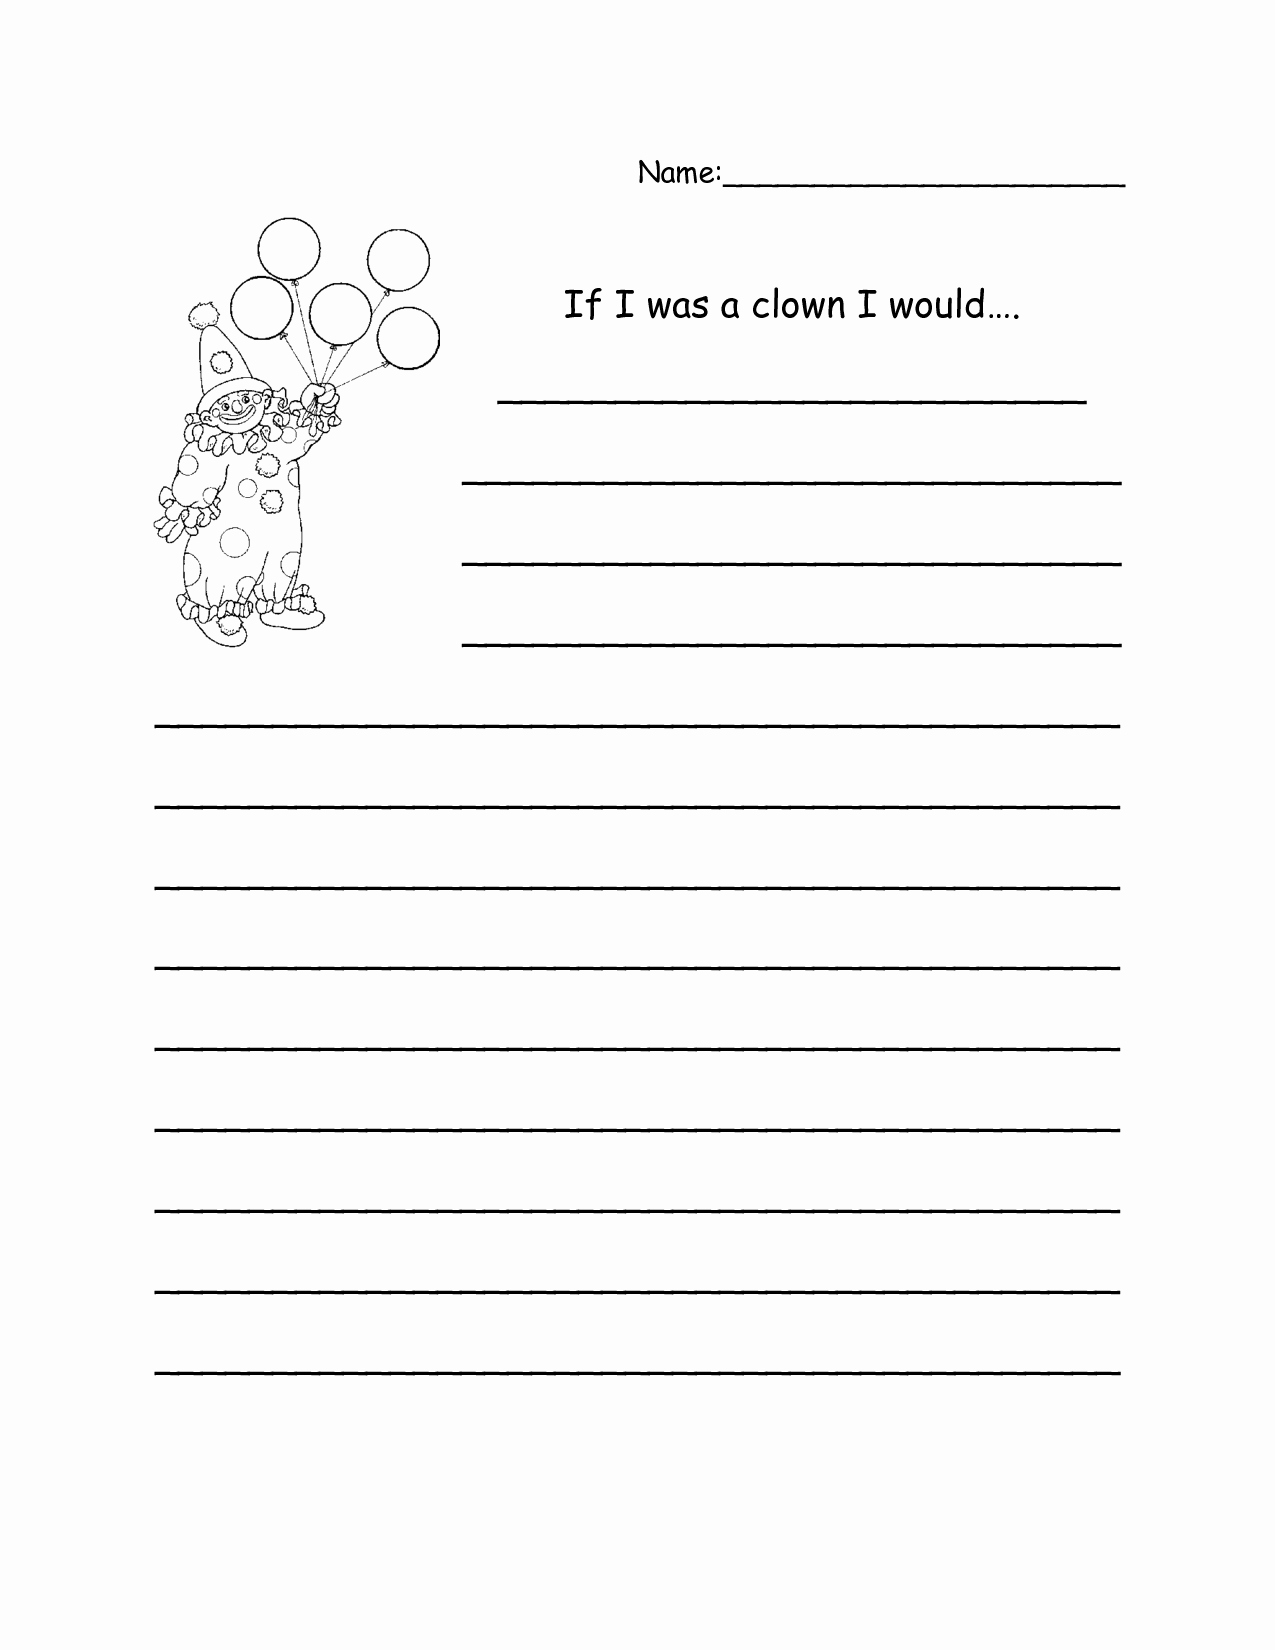 Third Grade Writing Worksheet Beautiful Third Grade Writing Prompts Mon Core Other Rank